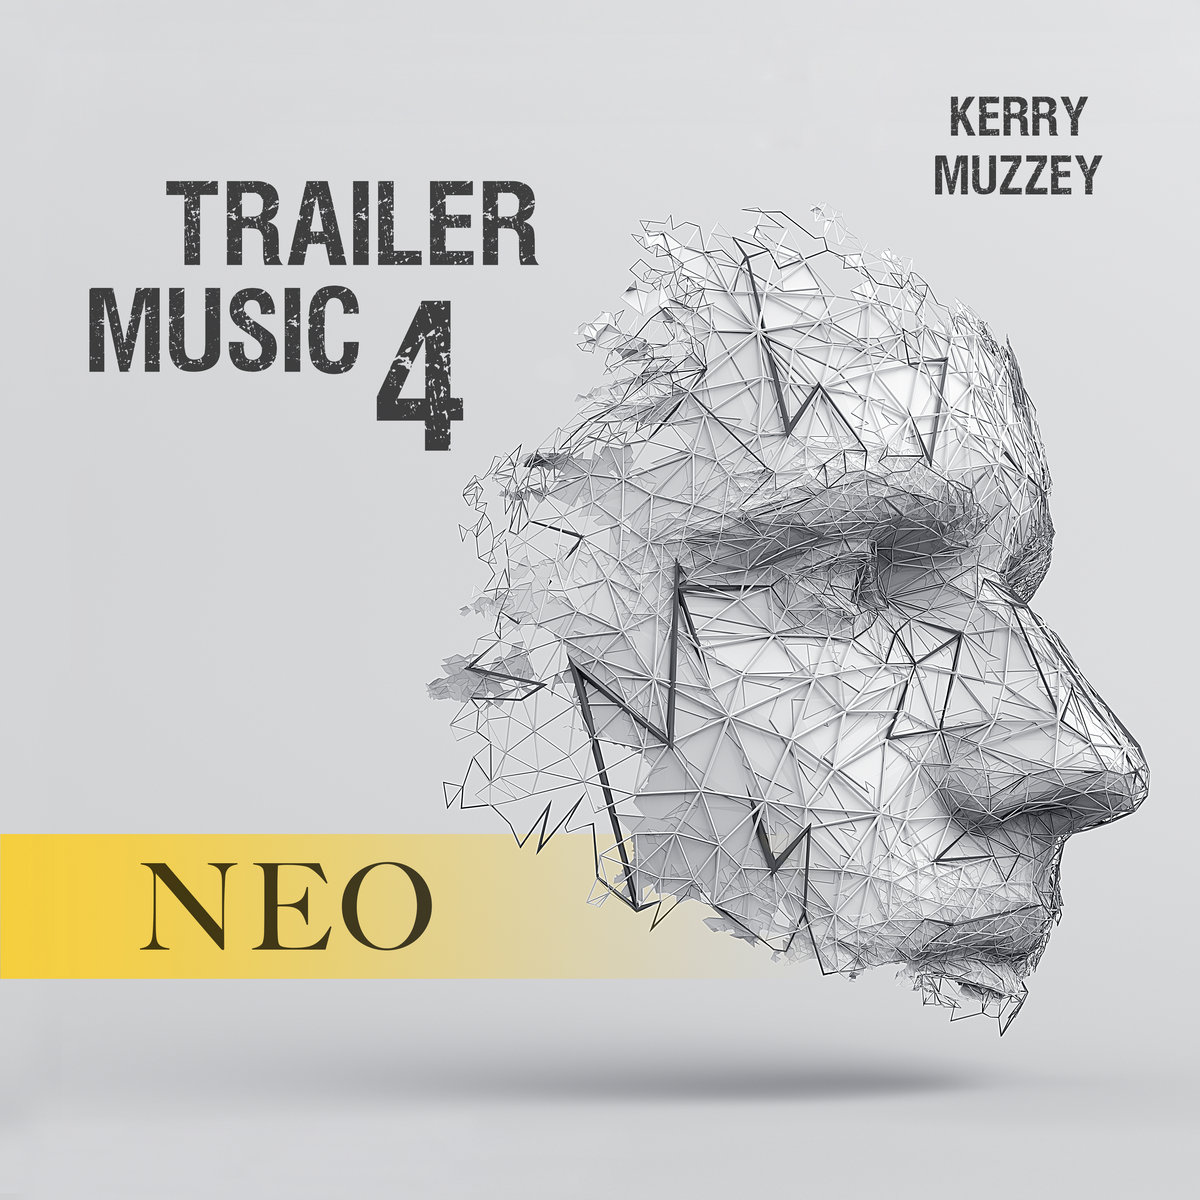 kerry muzzey trailer music